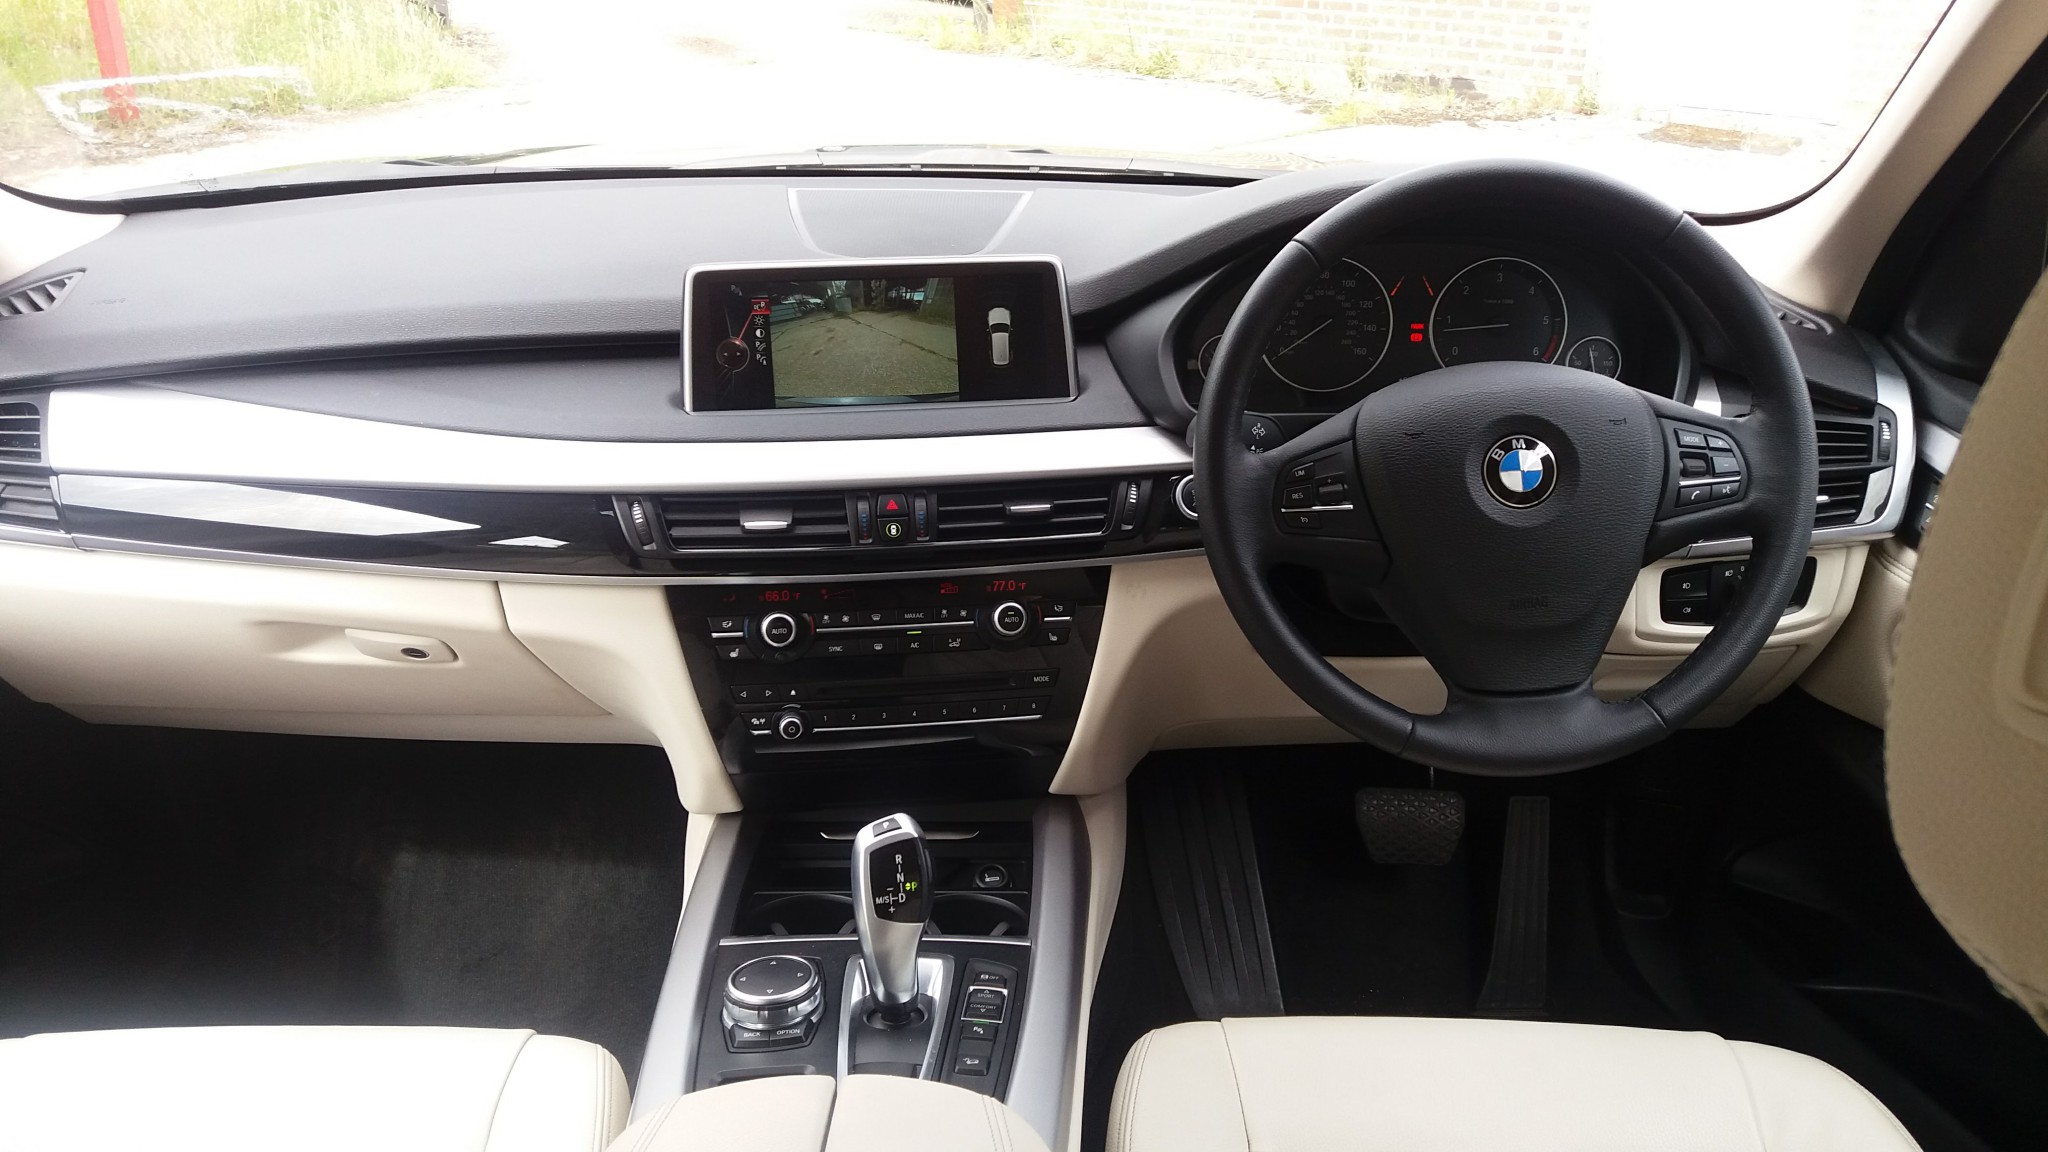 BMW X5 Leasing